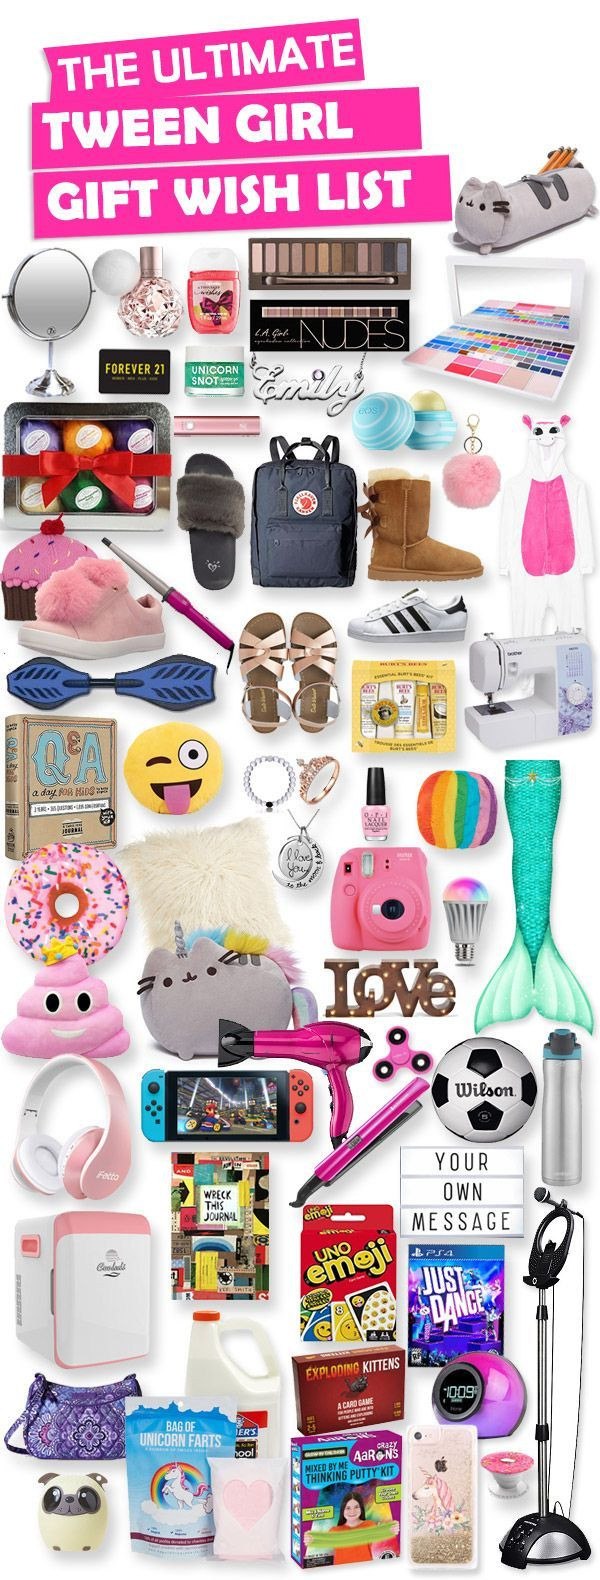 Birthday Gift Ideas For Tween Girl
 Gifts For Tween Girls Gift Ideas